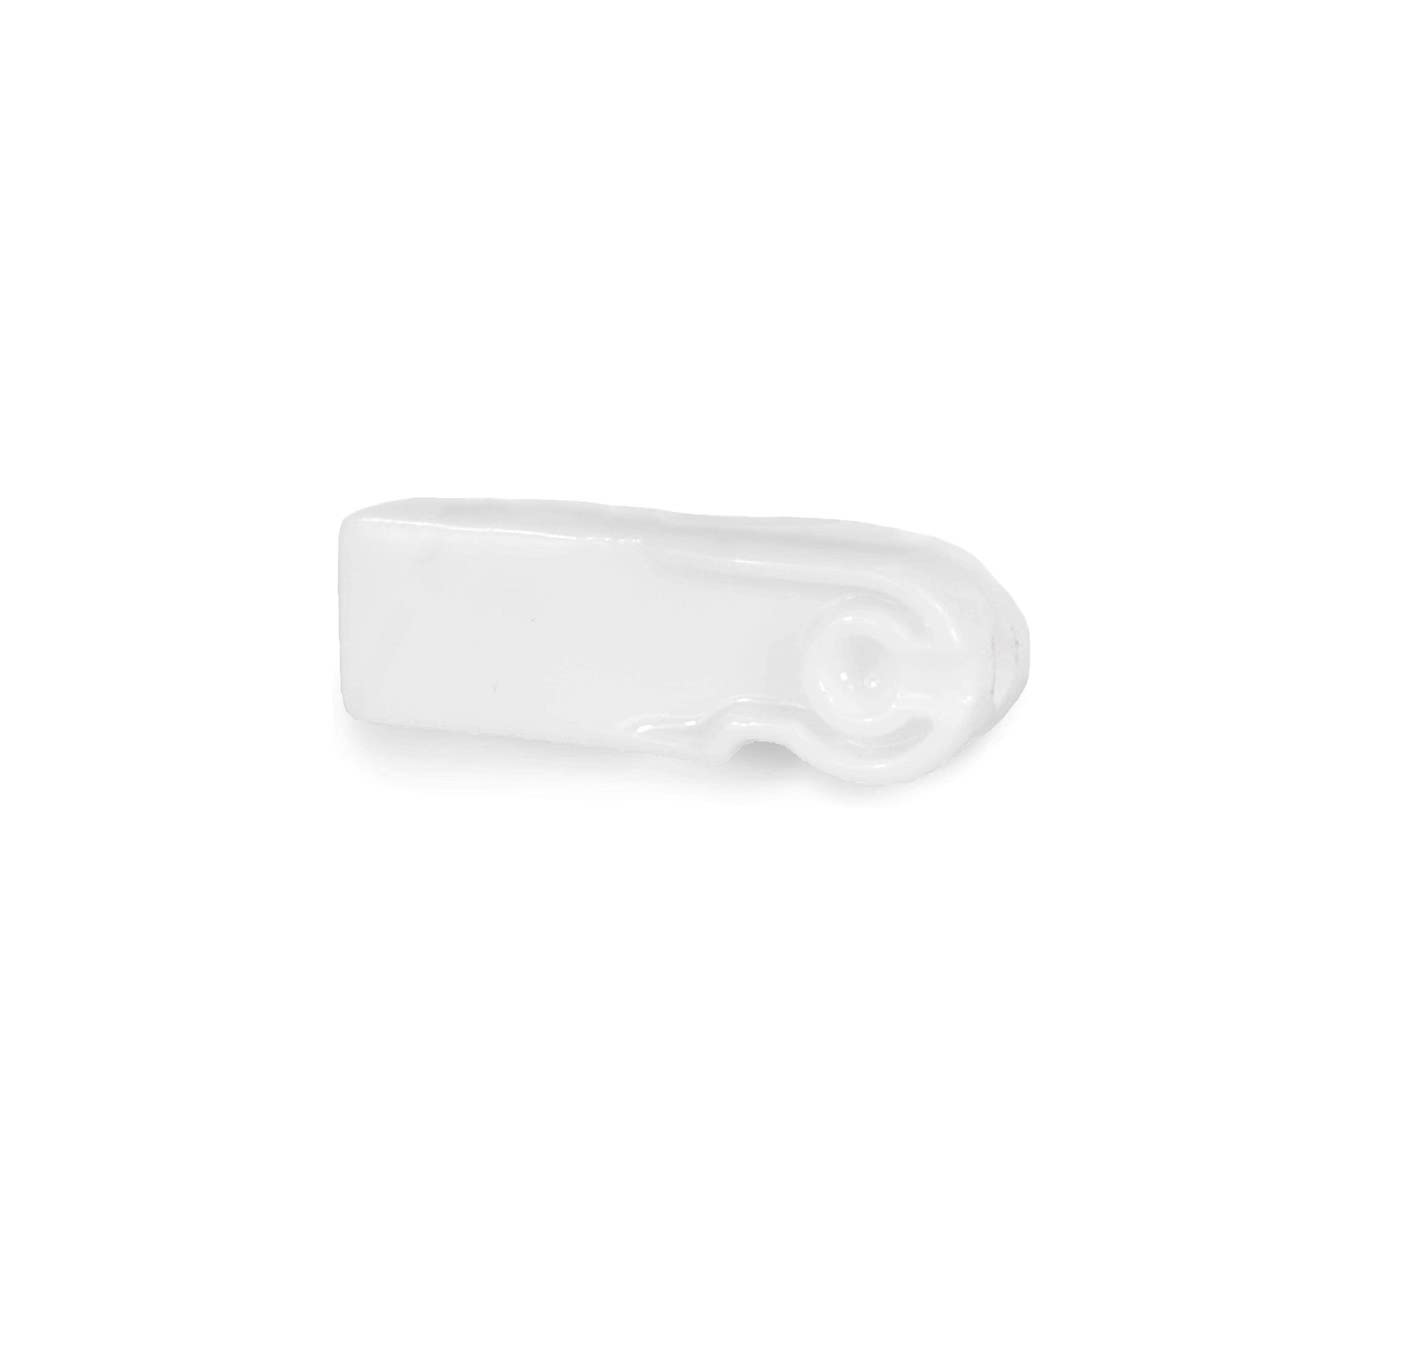 Ceramic Mouthpiece for Nectar v2 Vaporizer – White